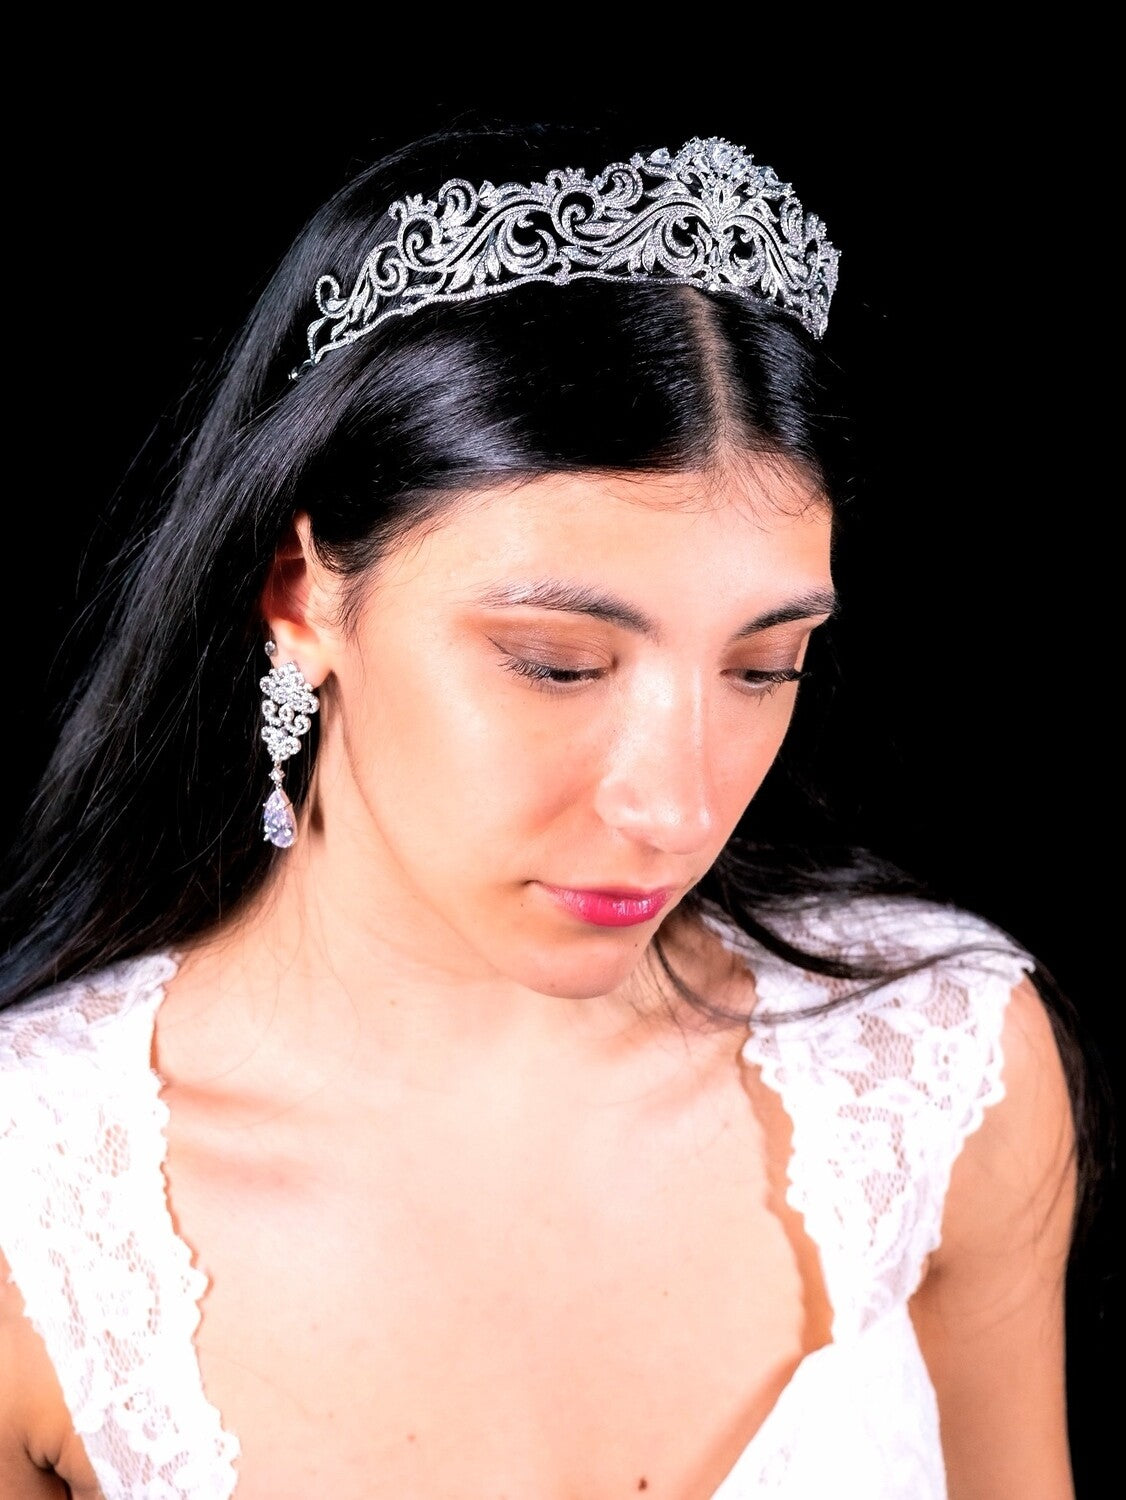 Ariana - Luxurious crystal wedding Tiara